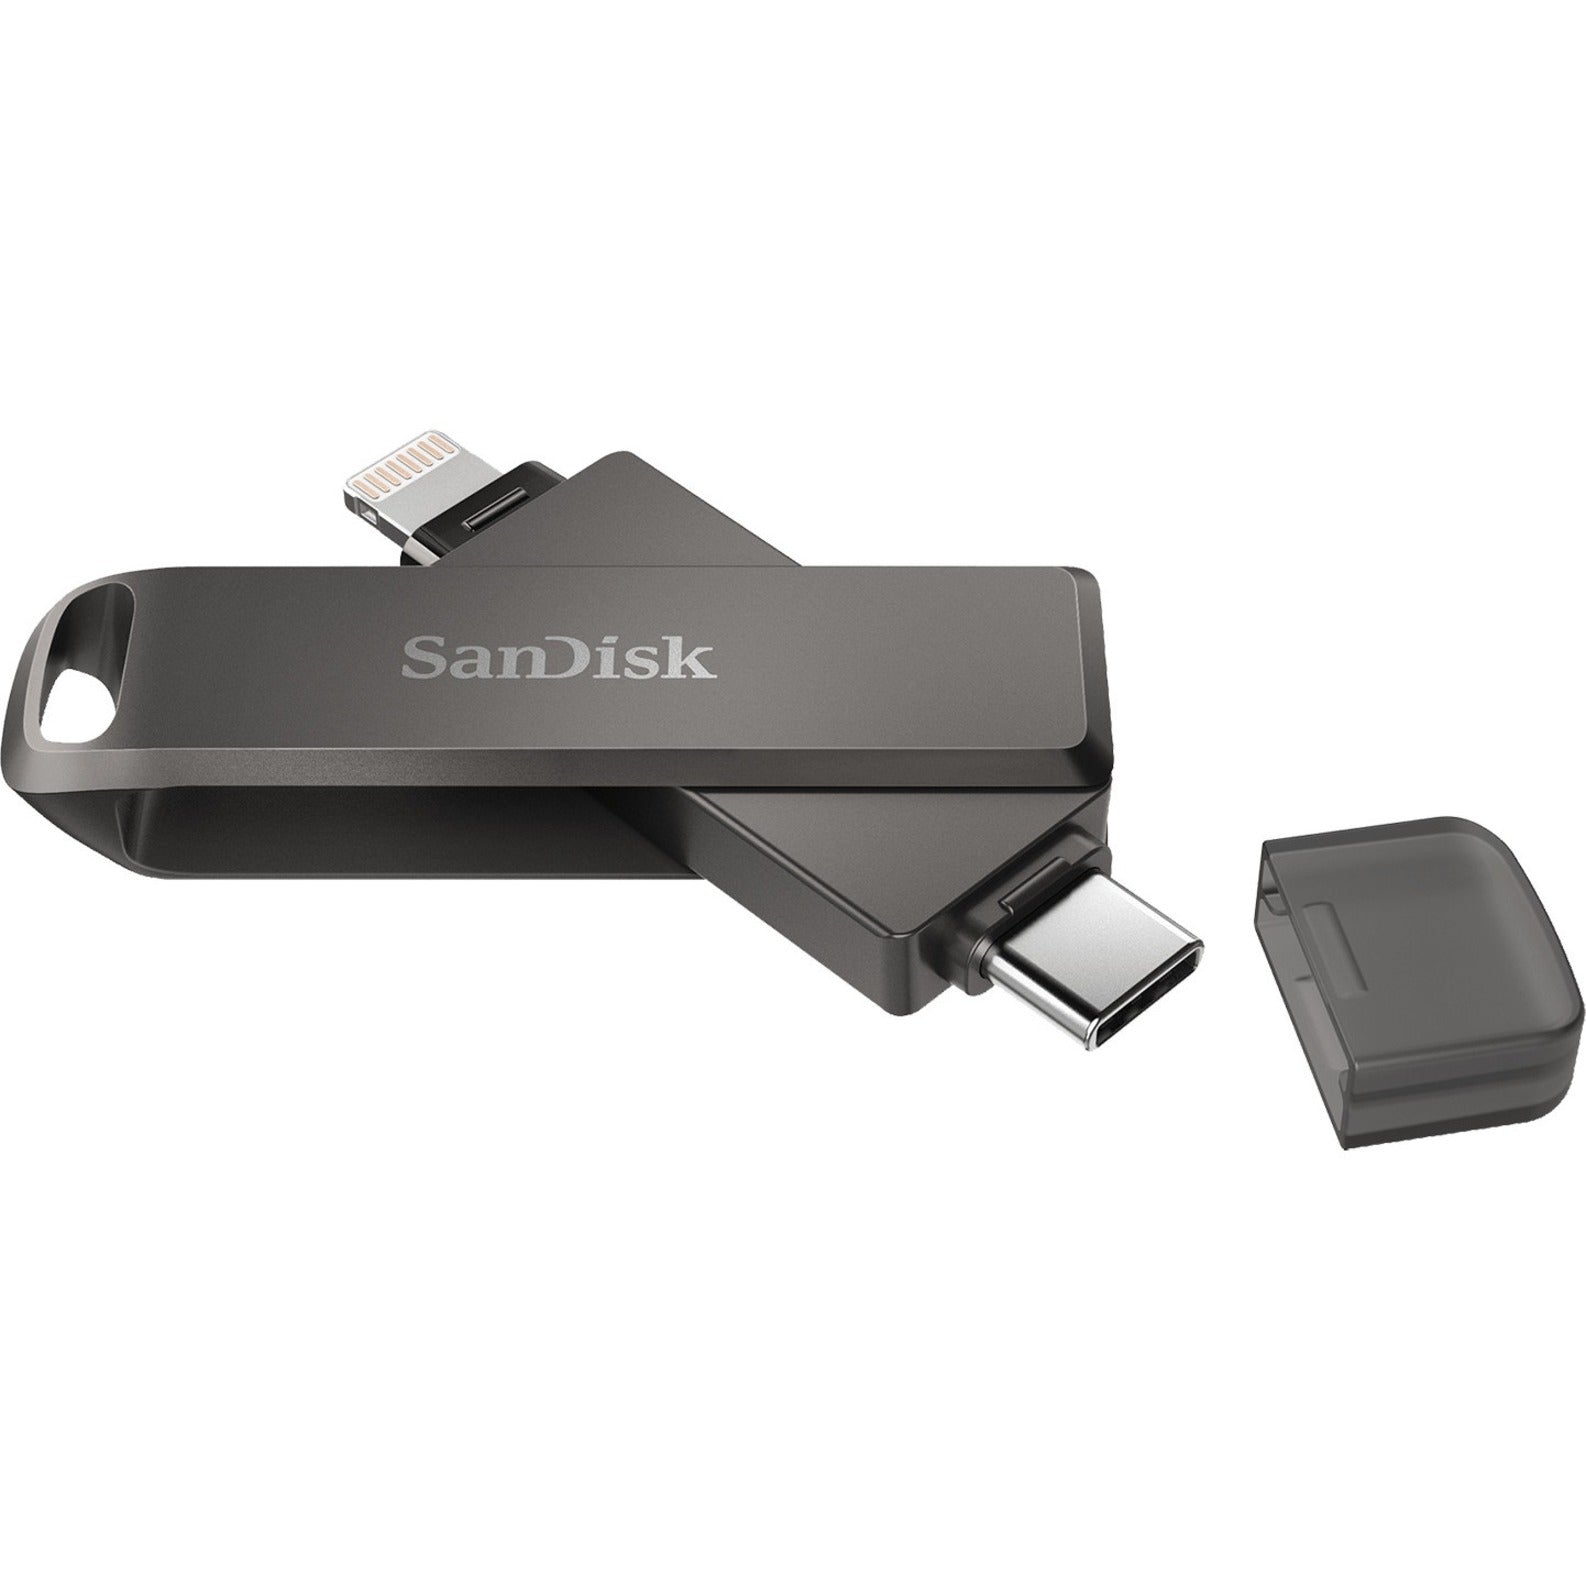 SanDisk SDIX70N-256G-AN6NE iXpand Flash Drive Luxe, 256GB, Swivel Design